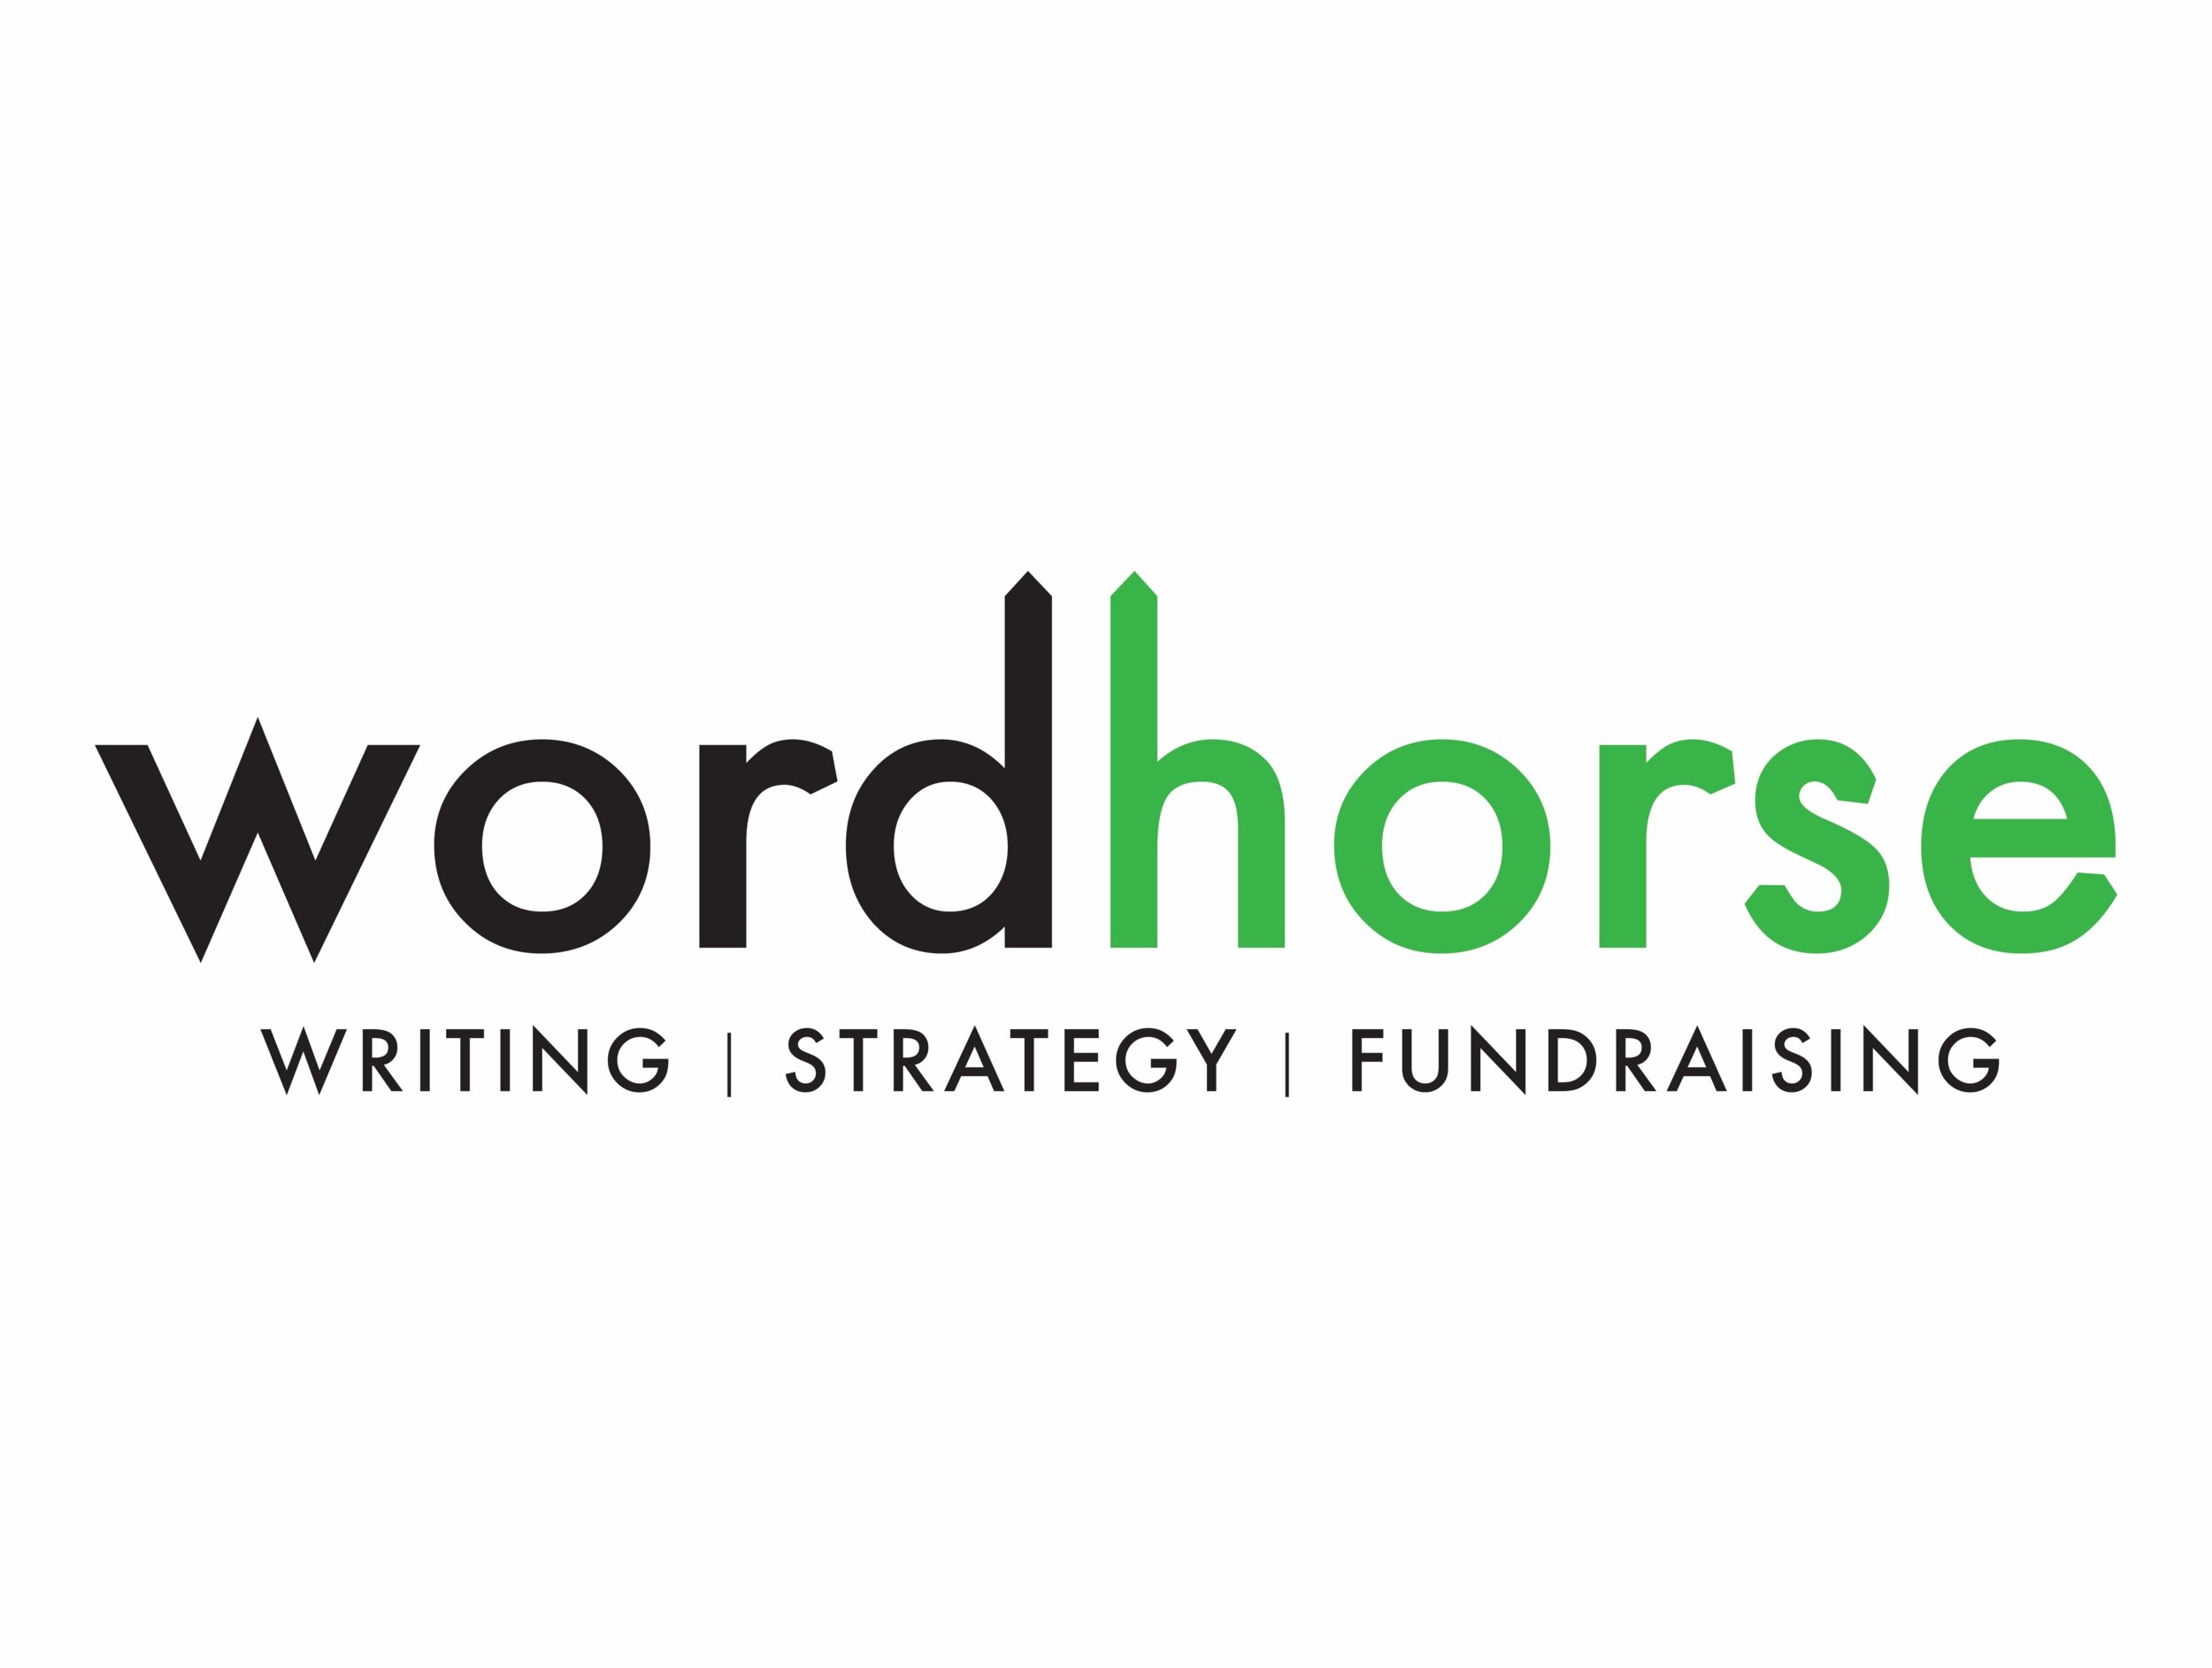 Wordhorse